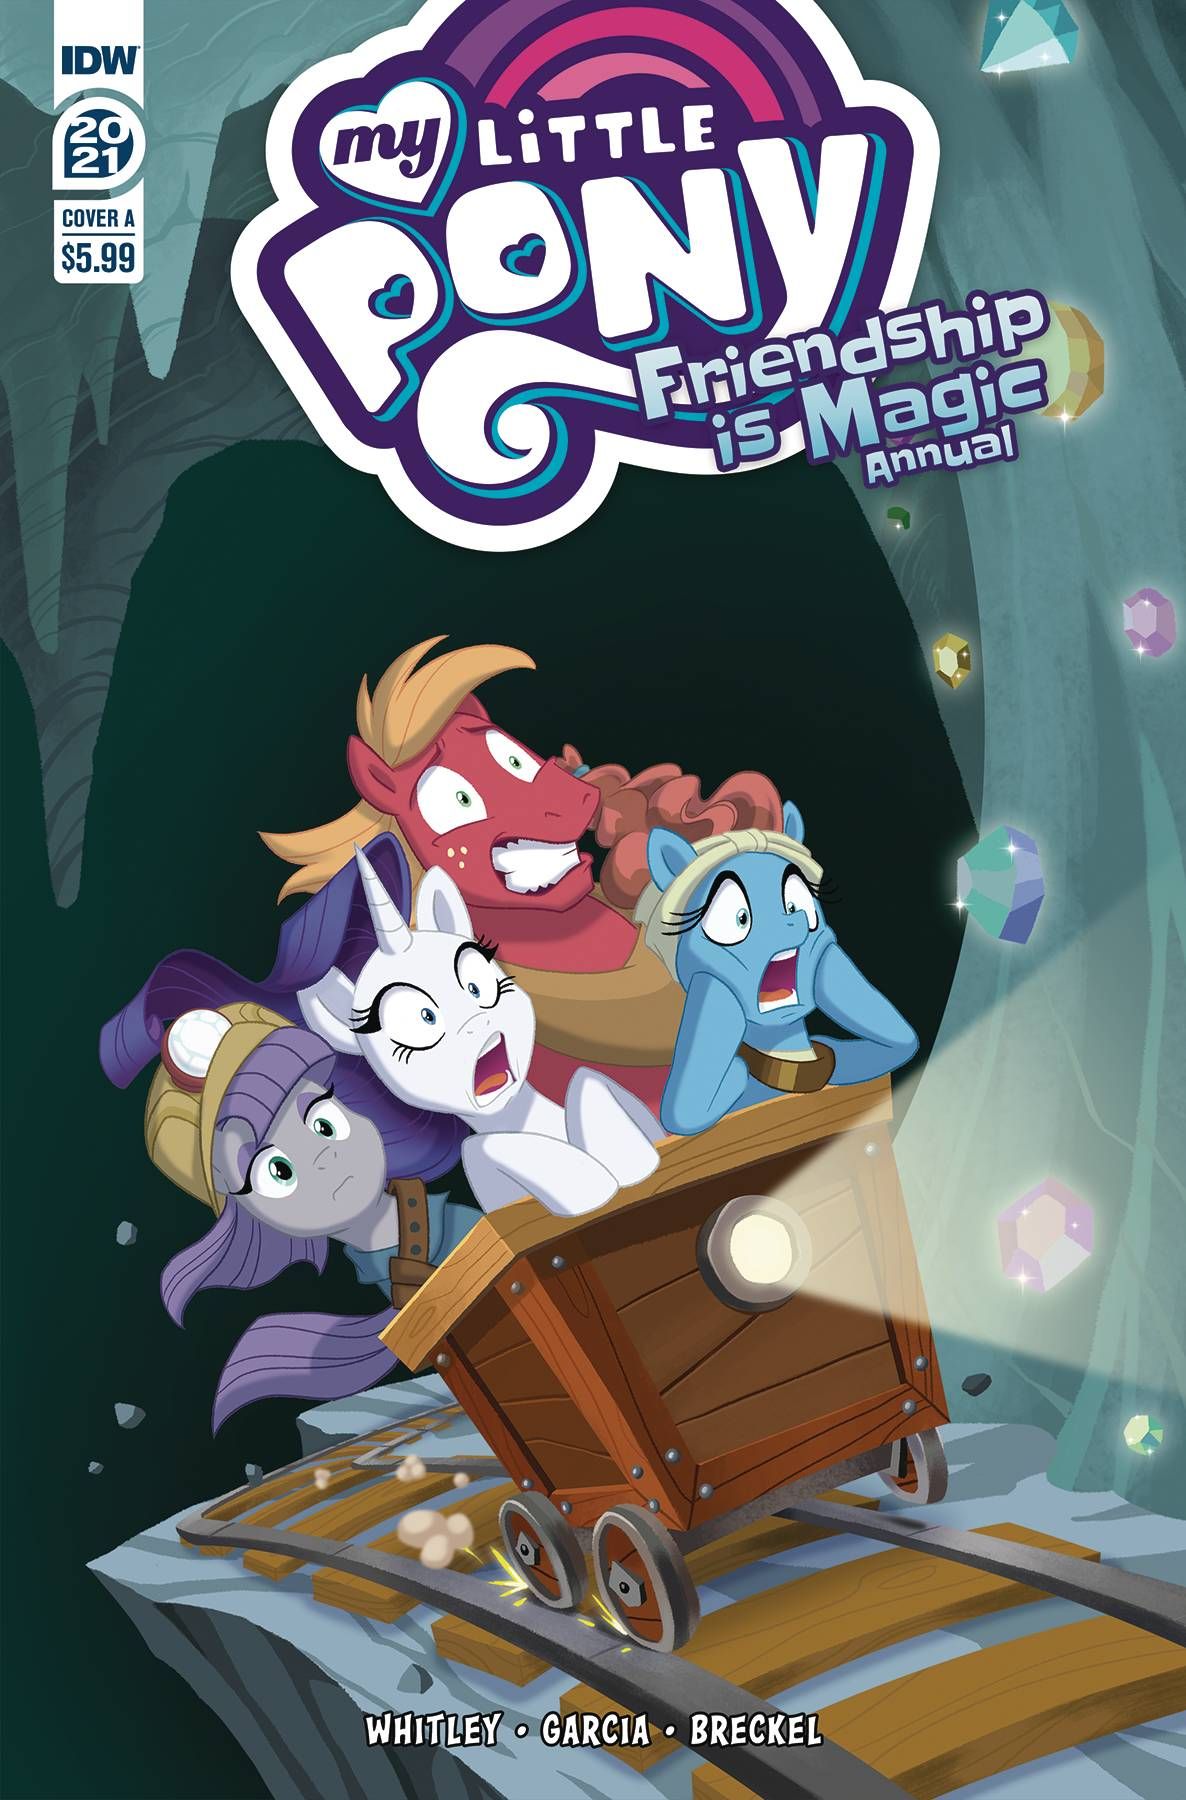 My Little Pony: Friendship Is Magic 2021 Annual #1 Comic